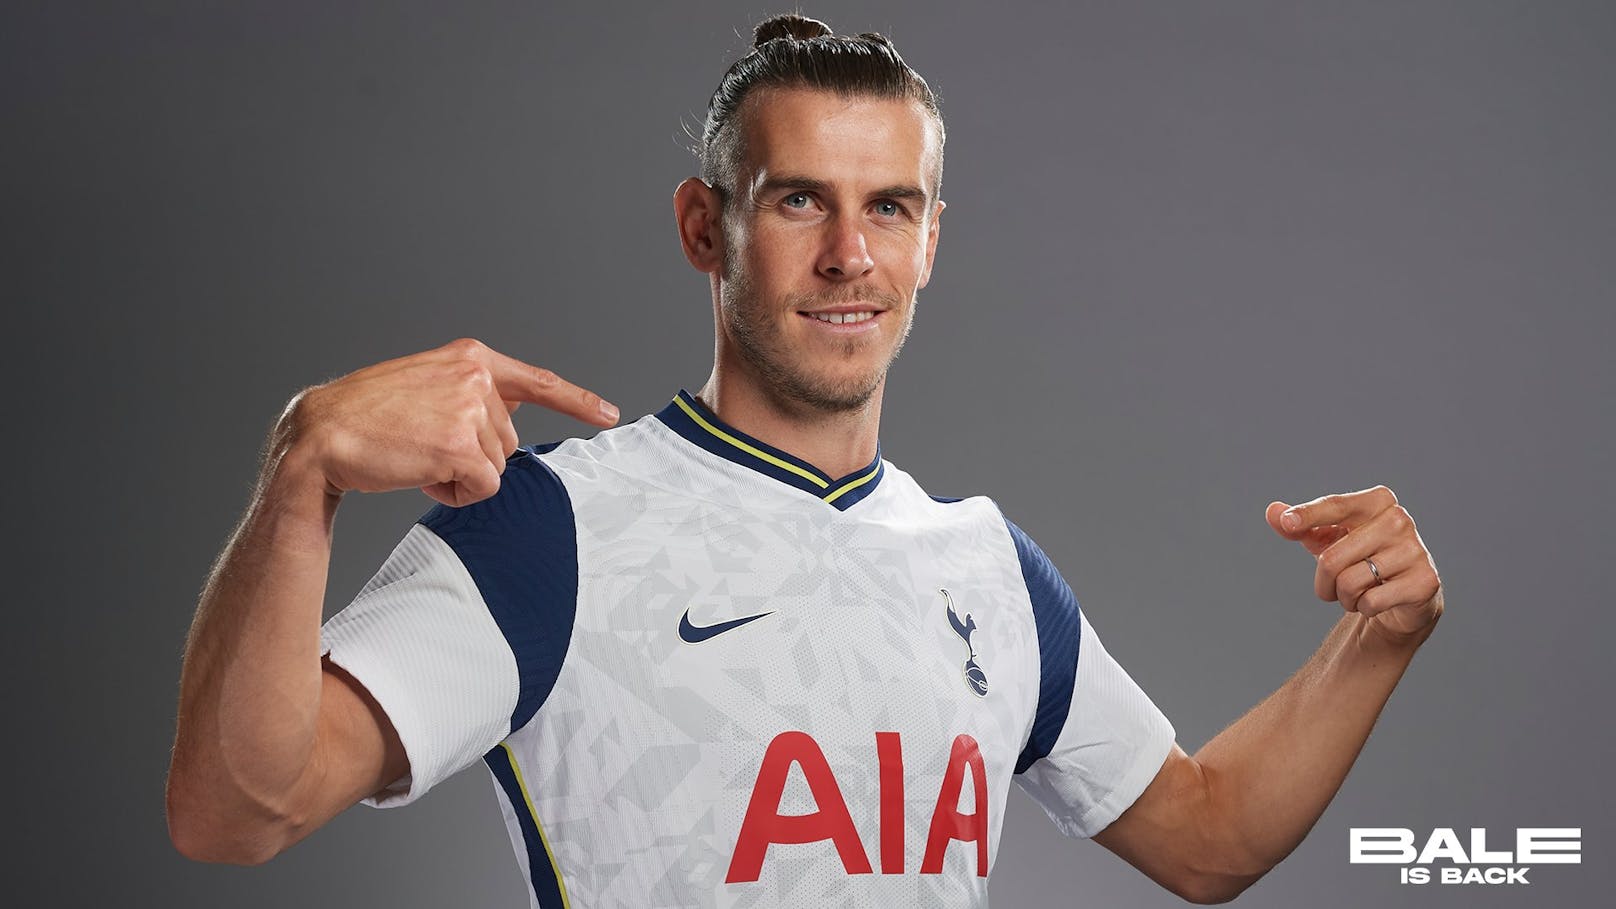 Bale zurück bei Tottenham, Real finanziert Gehalt mit